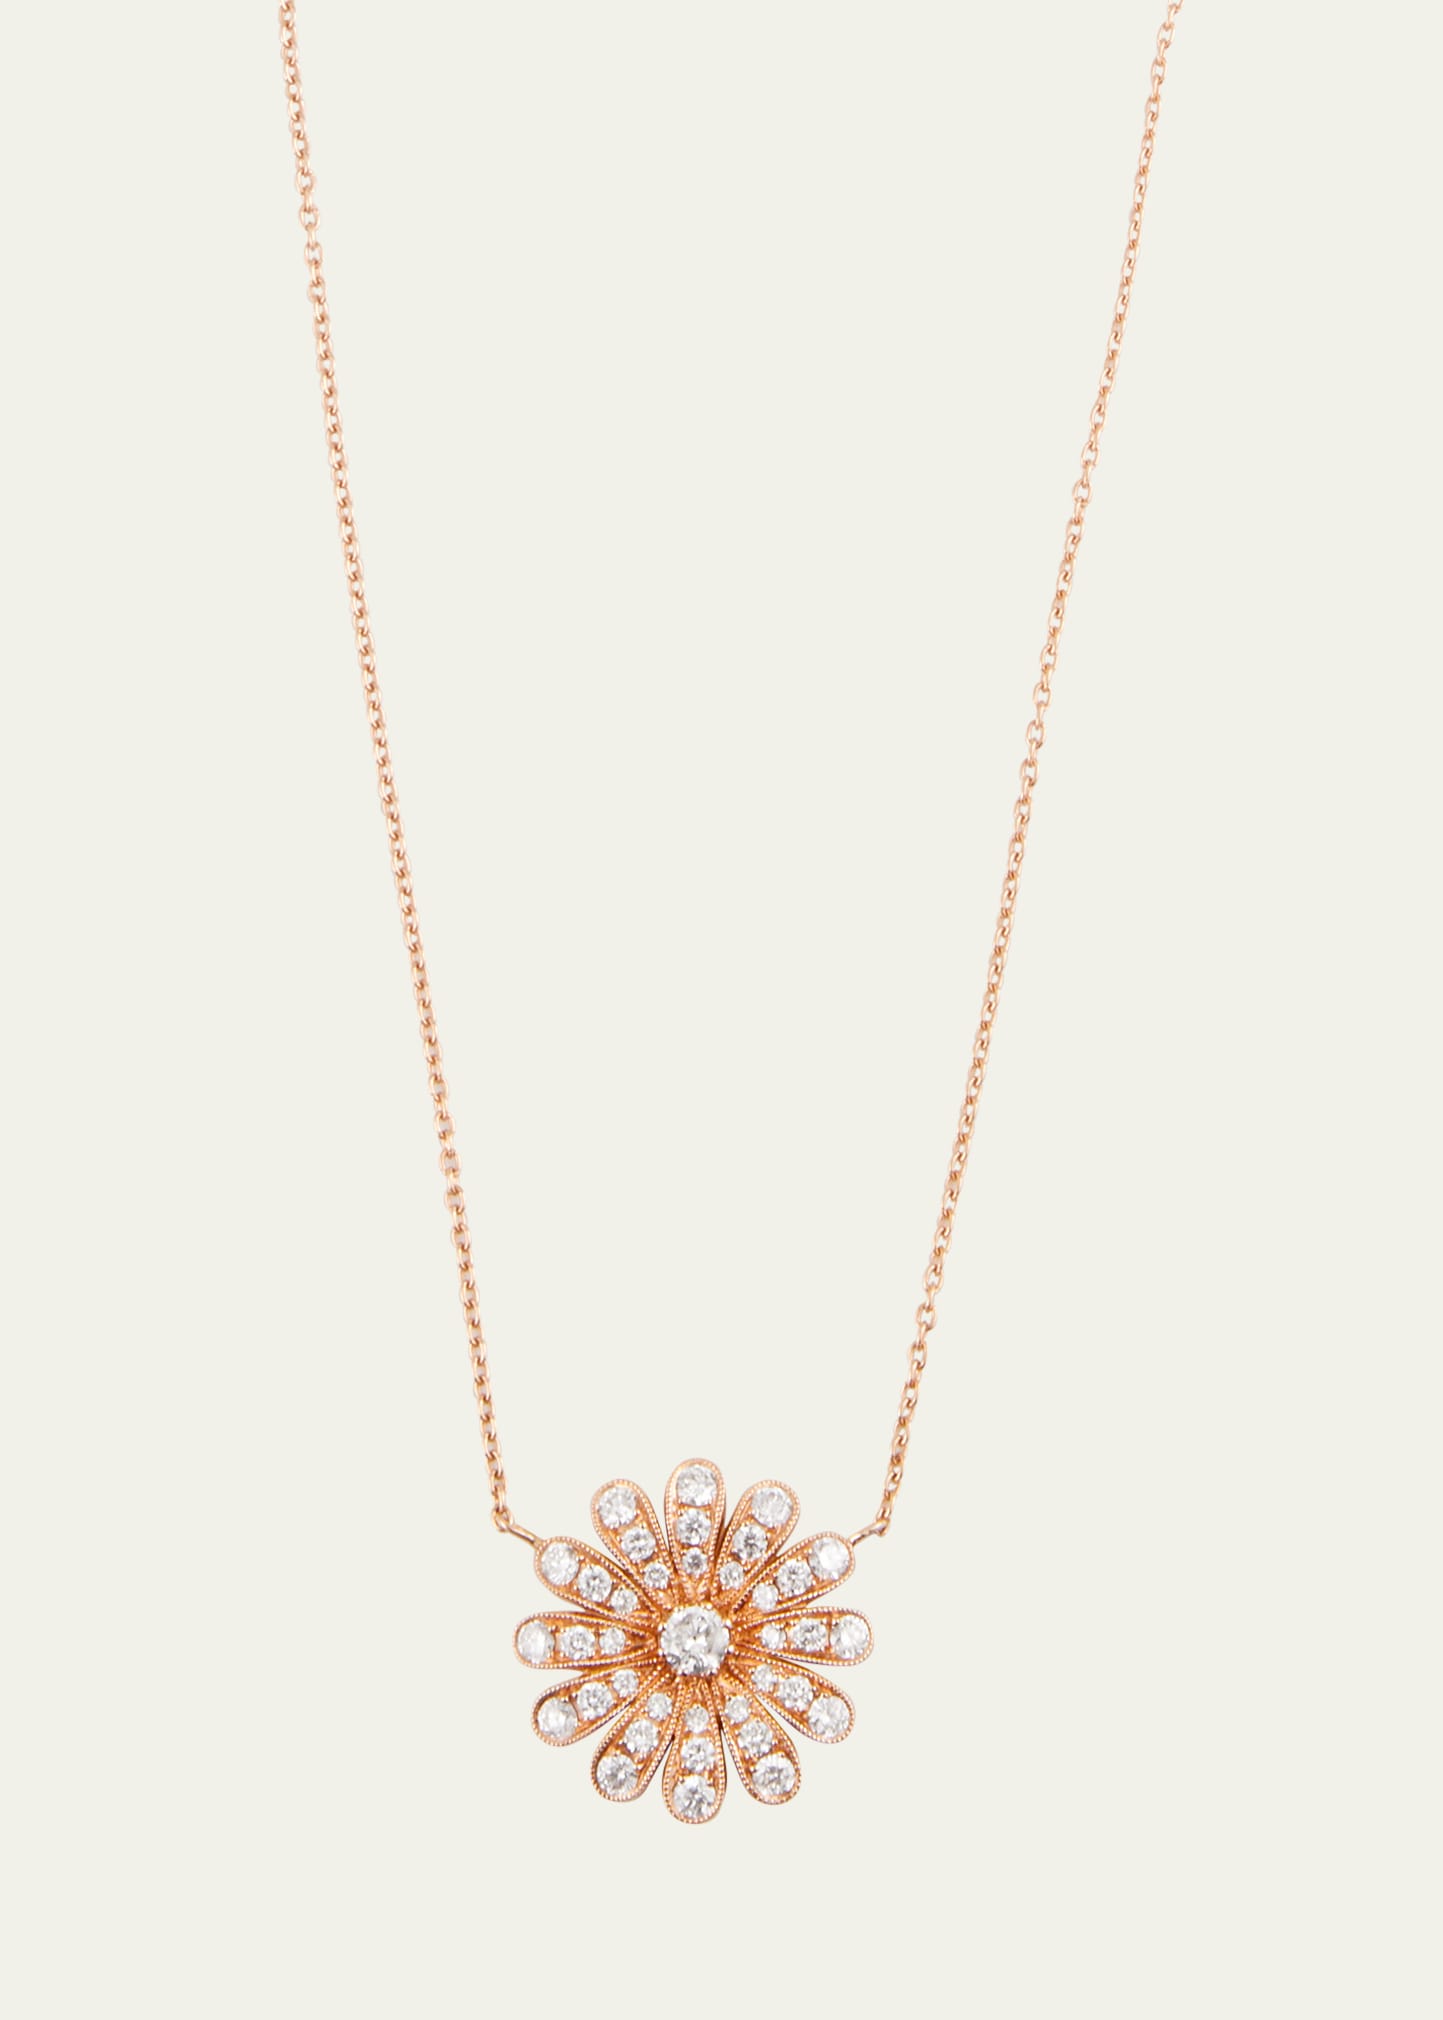 18K Rose Gold Daisy Pendant Necklace with Diamonds